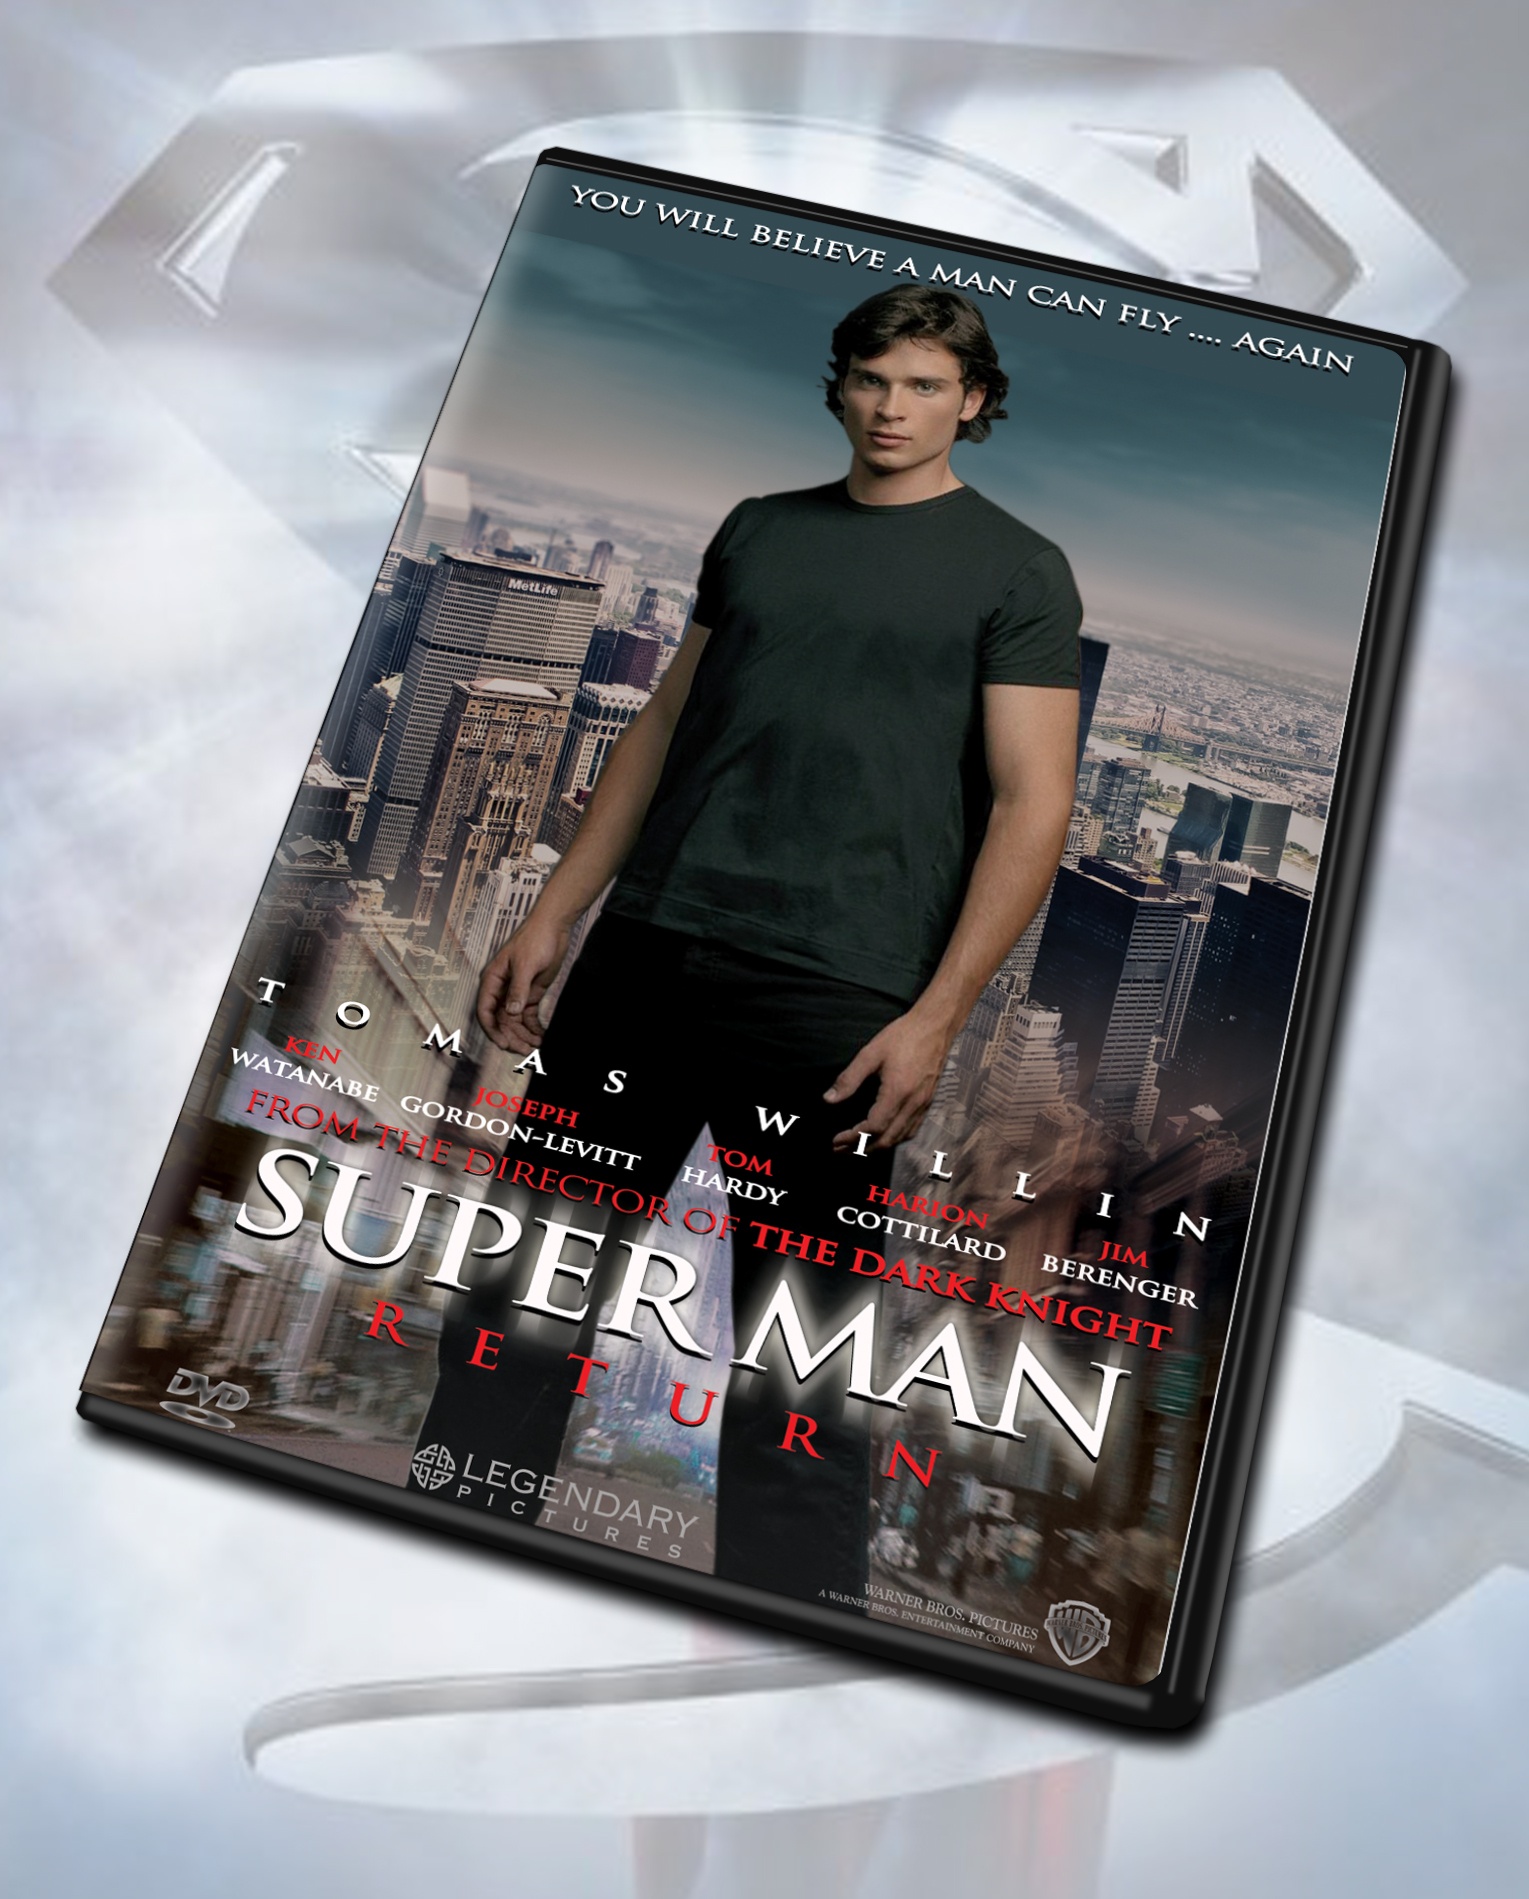 Superman Returns box cover